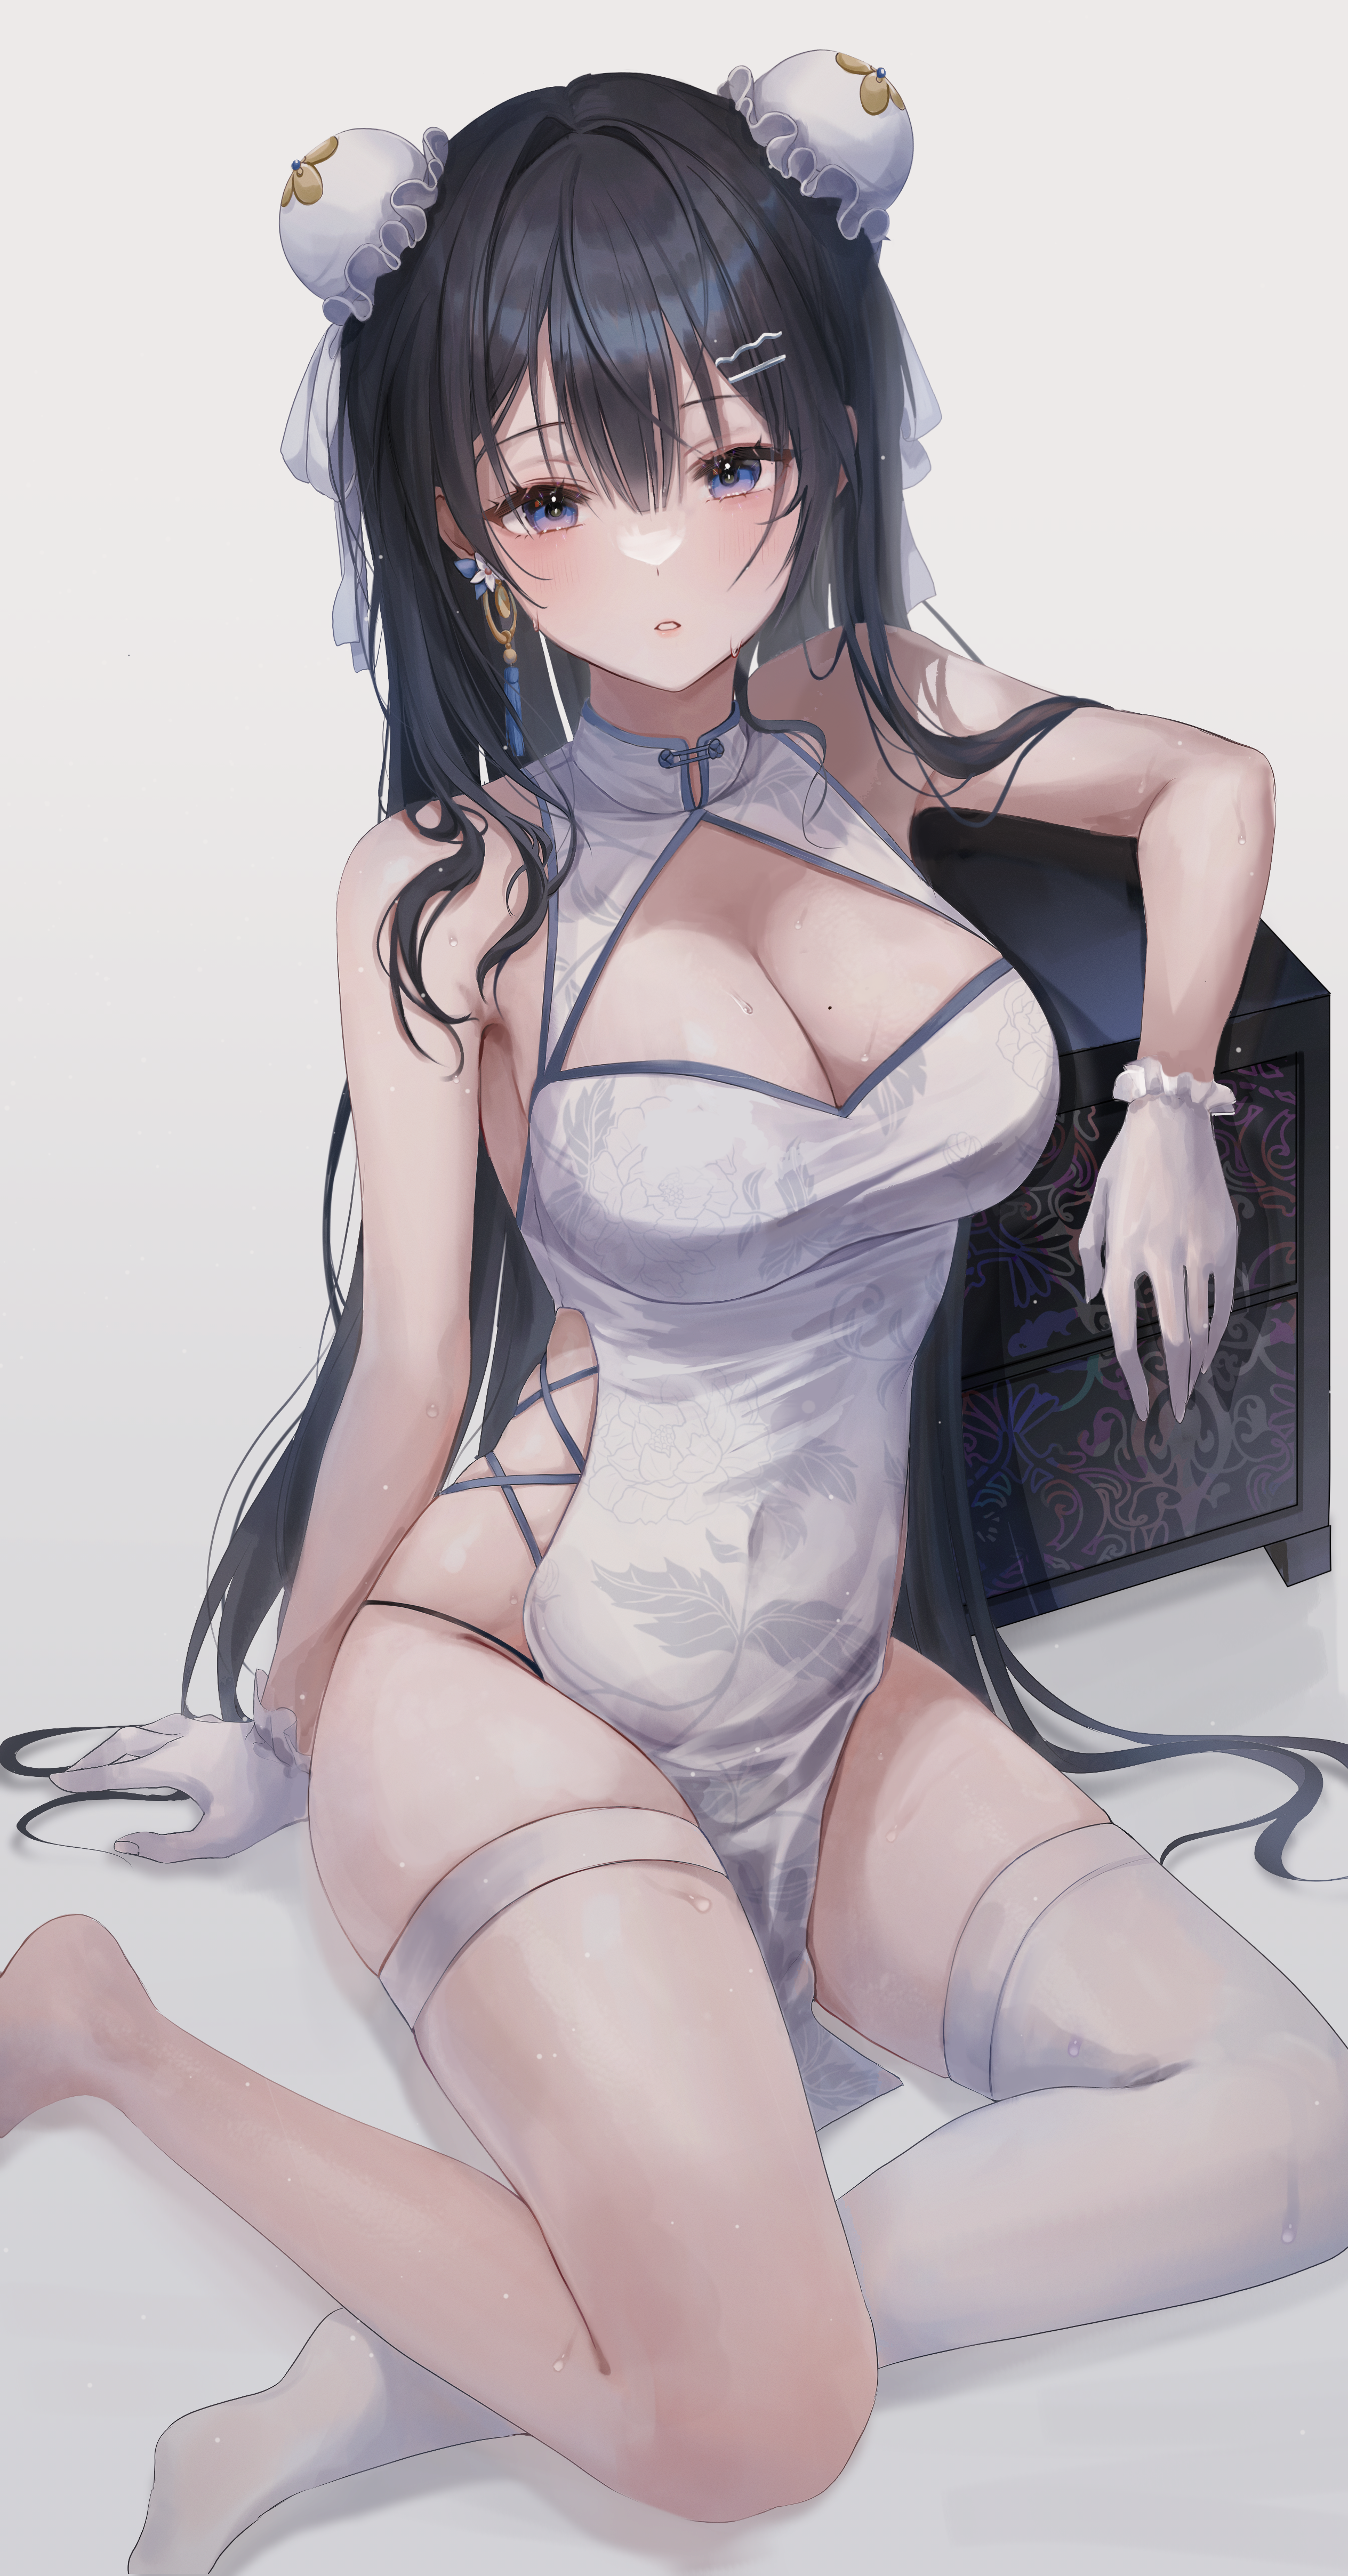 Anime 2528x4832 anime anime girls cleavage big boobs stockings dress blue eyes sweaty body Chinese dress black hair Myowa artwork